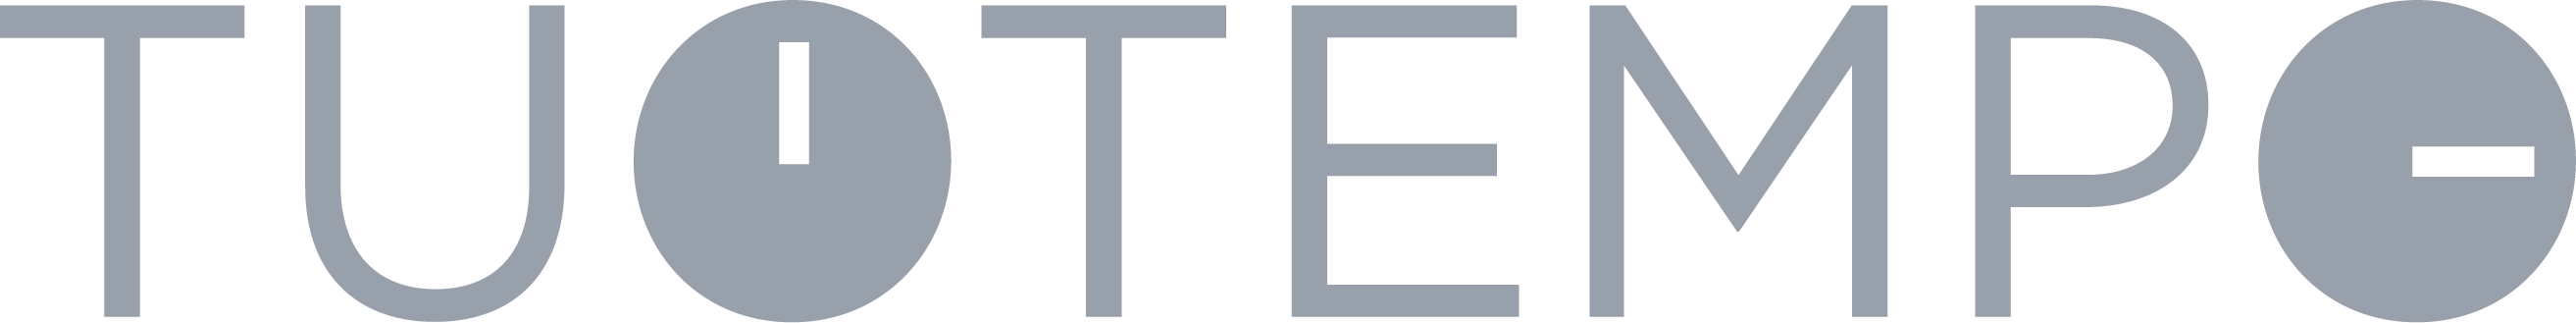 logo-tuotempo-grey-tagline-rgb-1